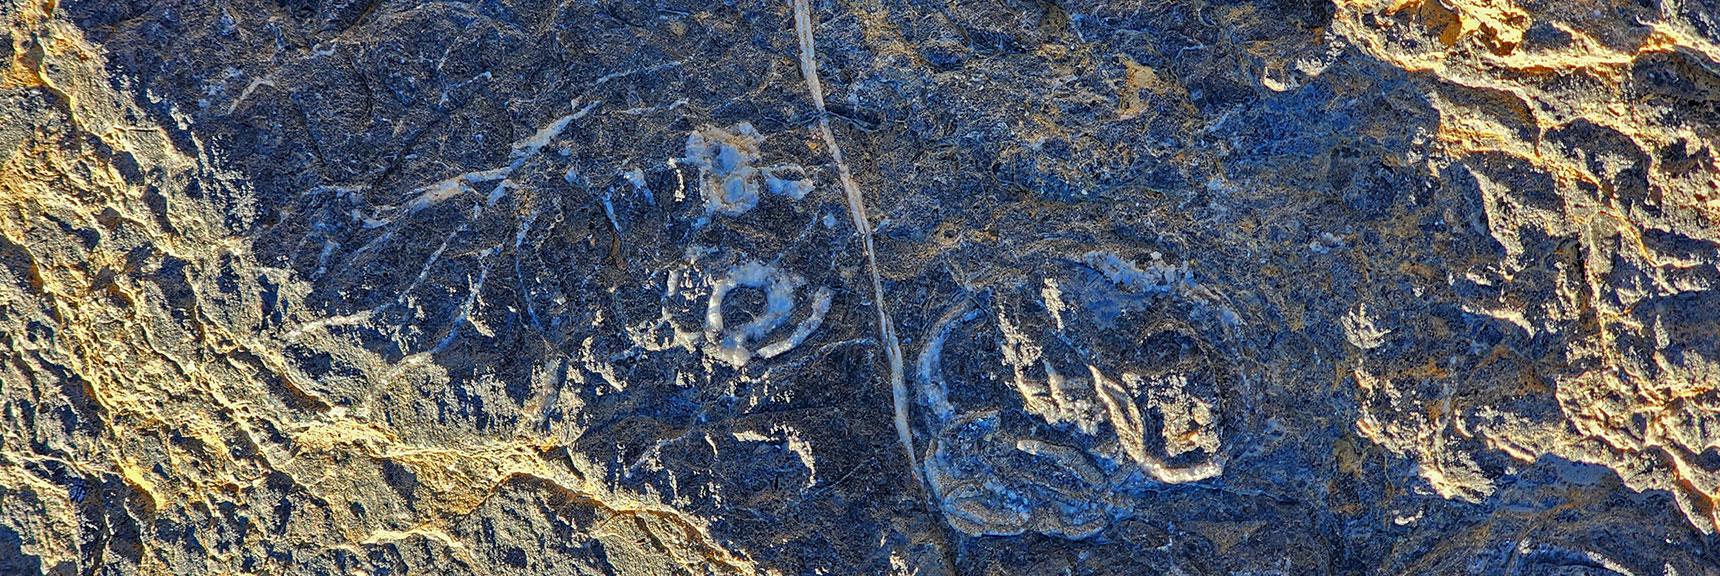 Fossils Near the Fossil Ridge Sign on Mormon Well Road | Fossil Ridge Far East | Desert National Wildlife Refuge, Nevada